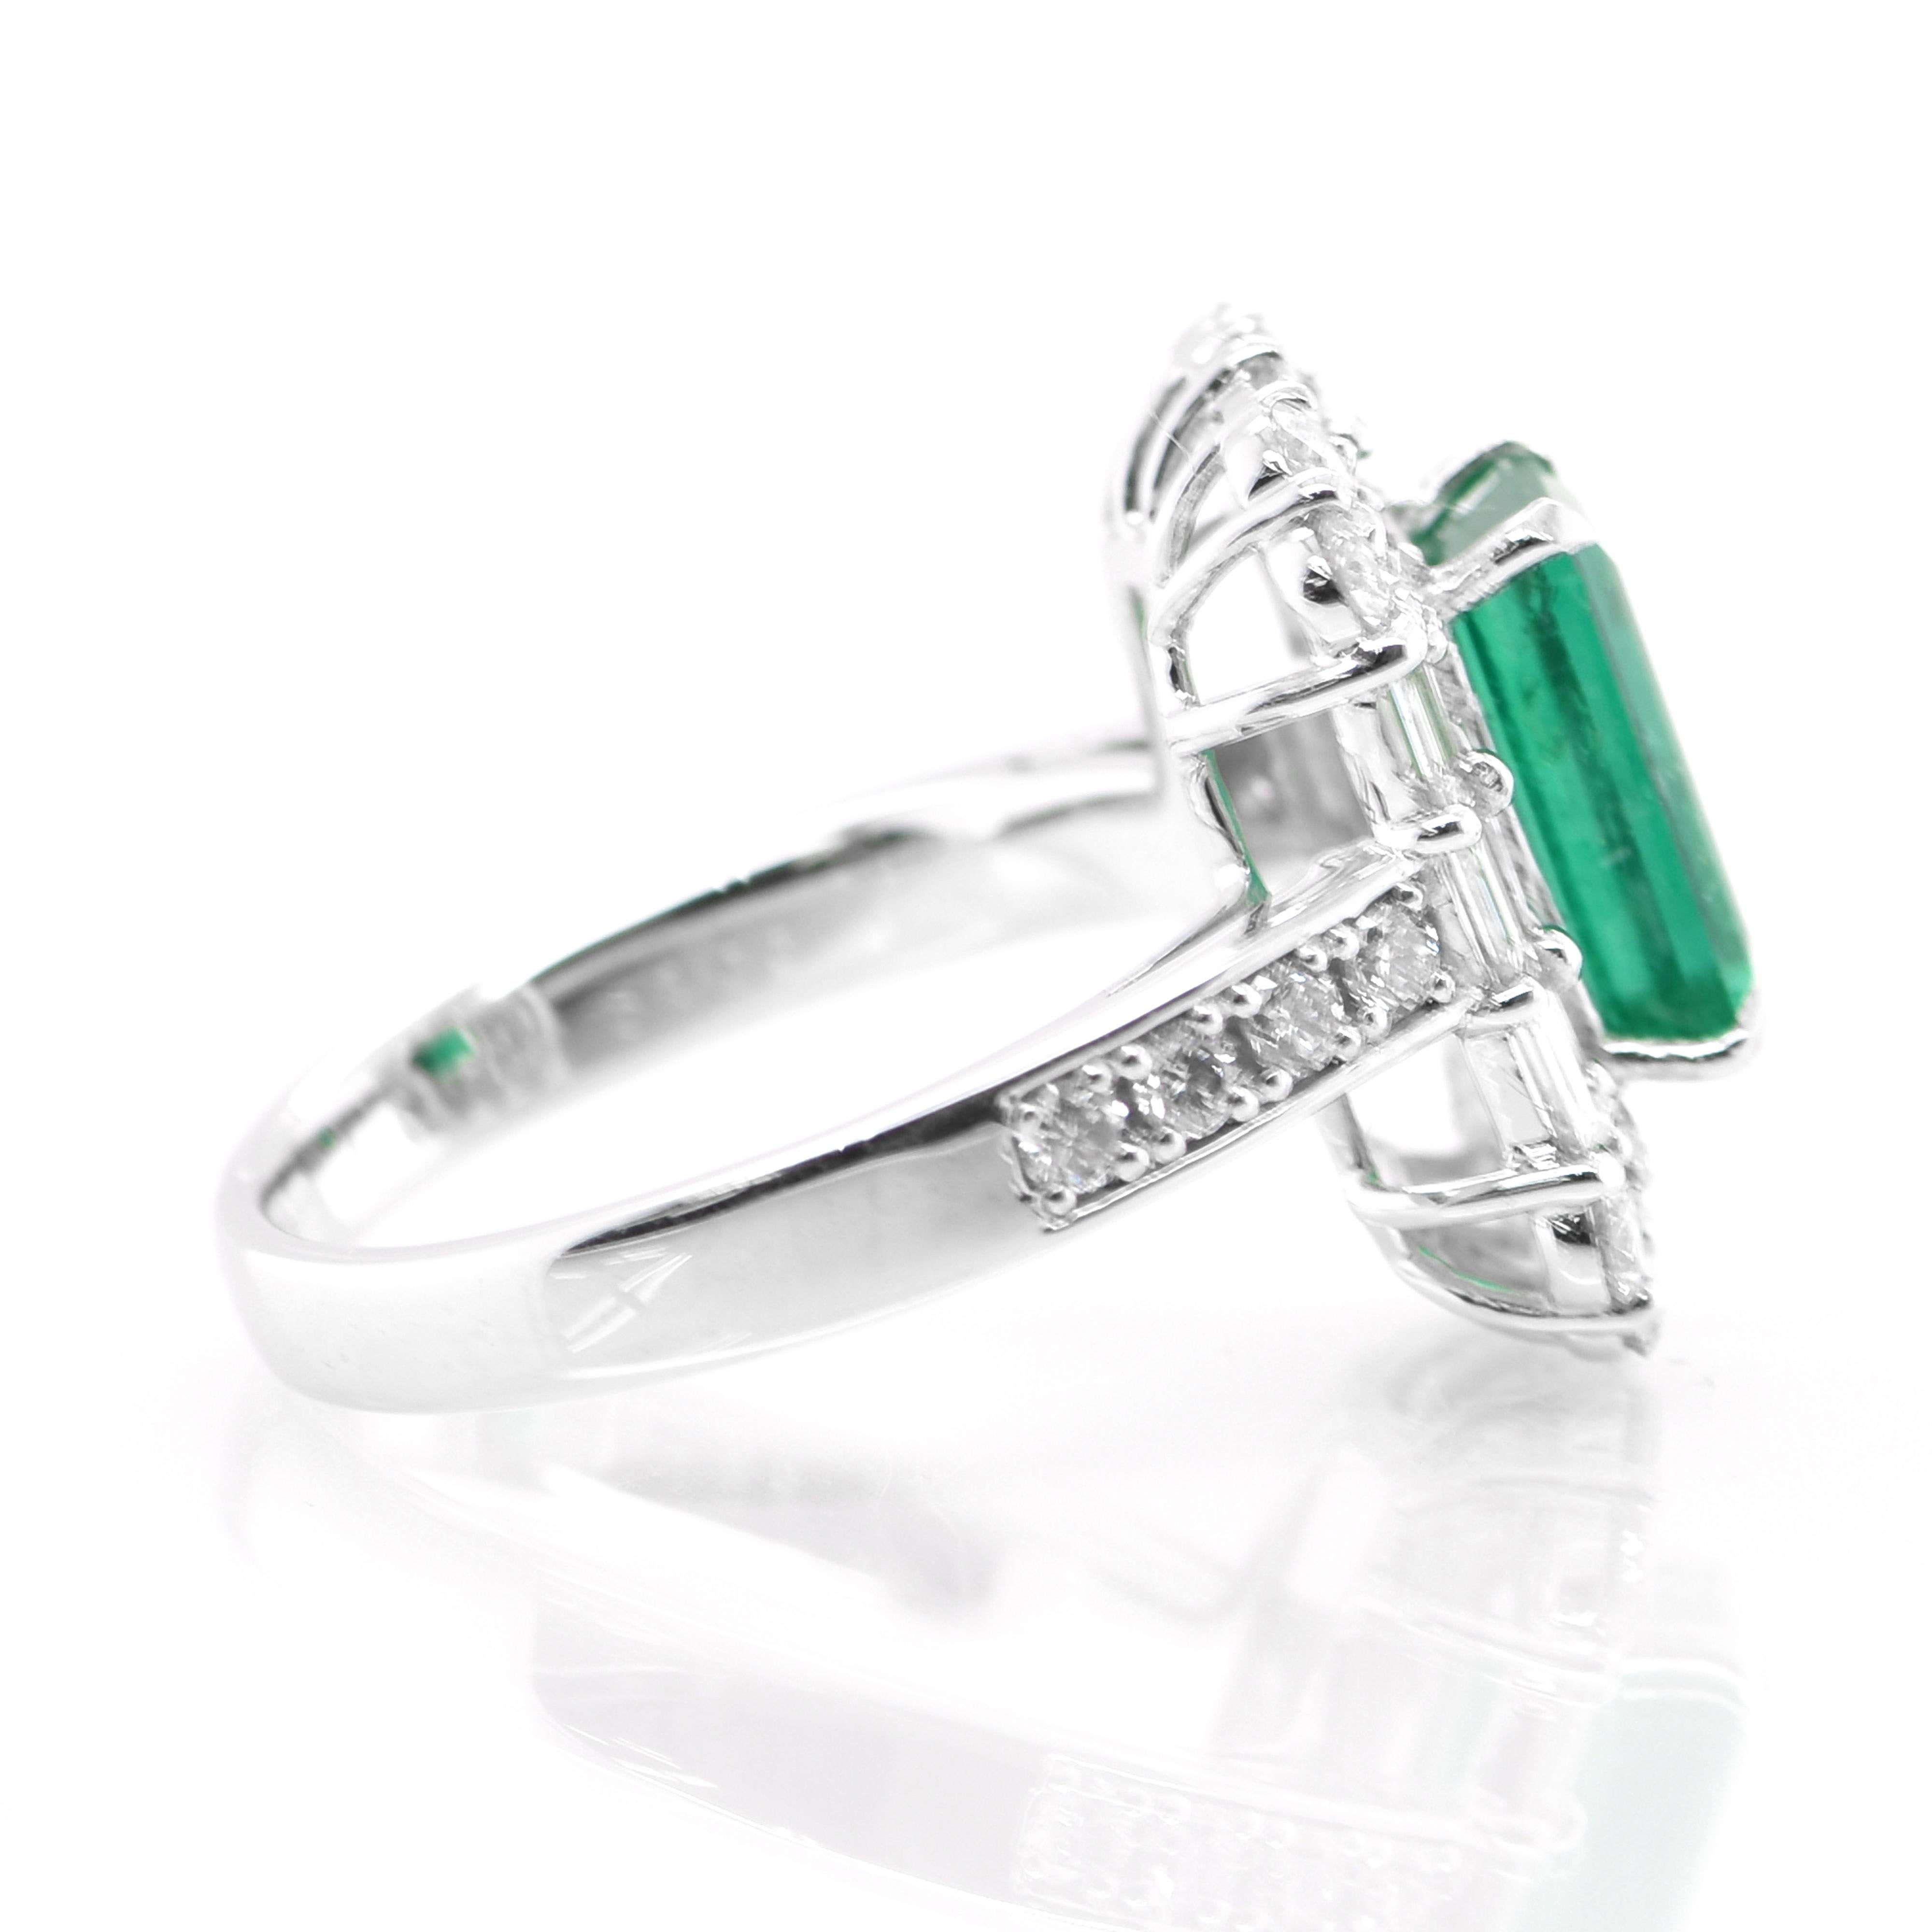 Women's 1.94 Carat Natural Emerald and Diamond Art Deco Inspired Ring Set in Platinum